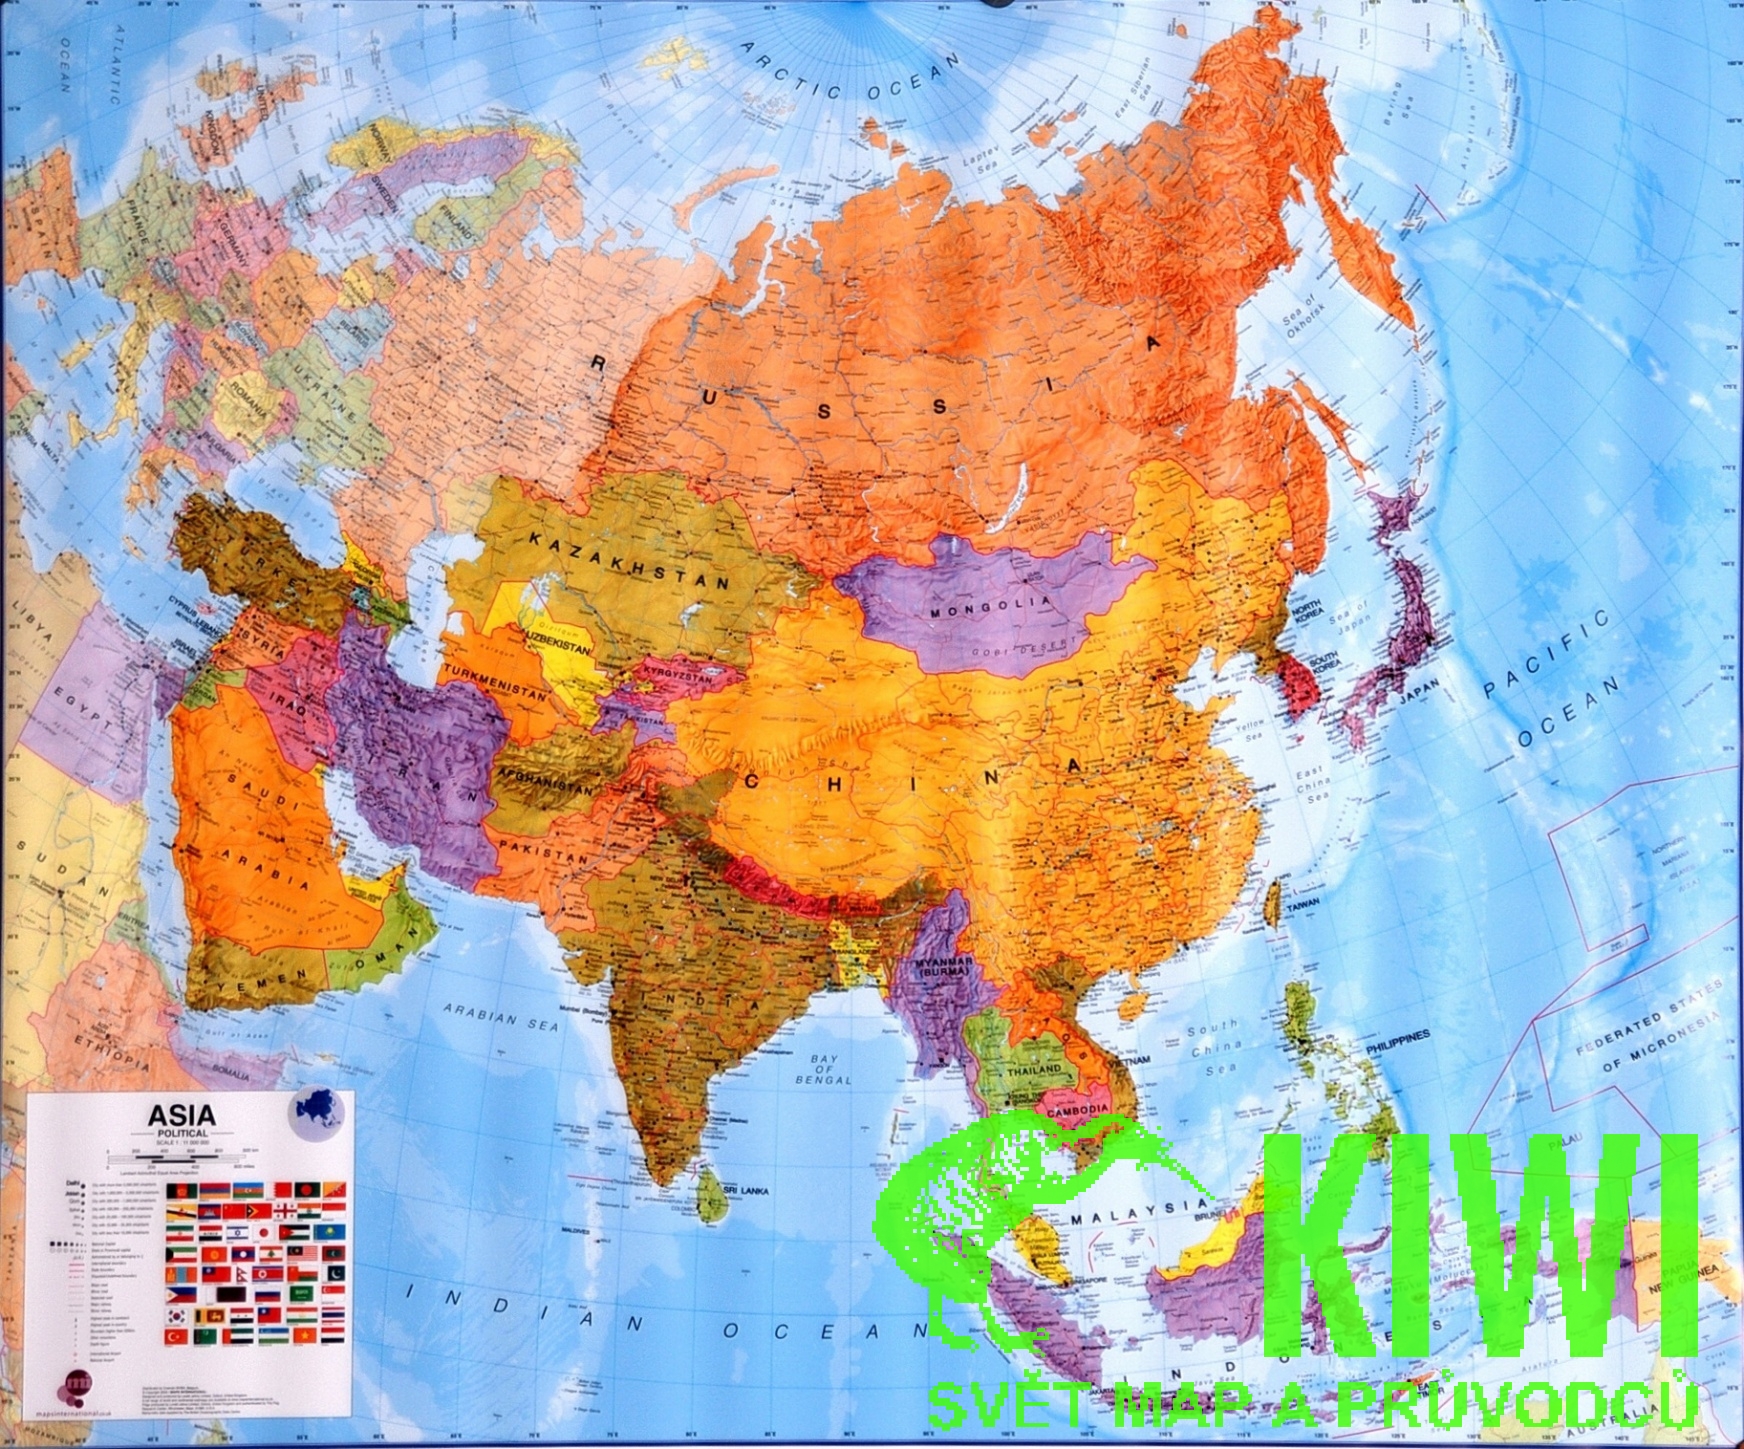 ITMB Publishing nástěnná mapa Asia - papír, 120x100 cm